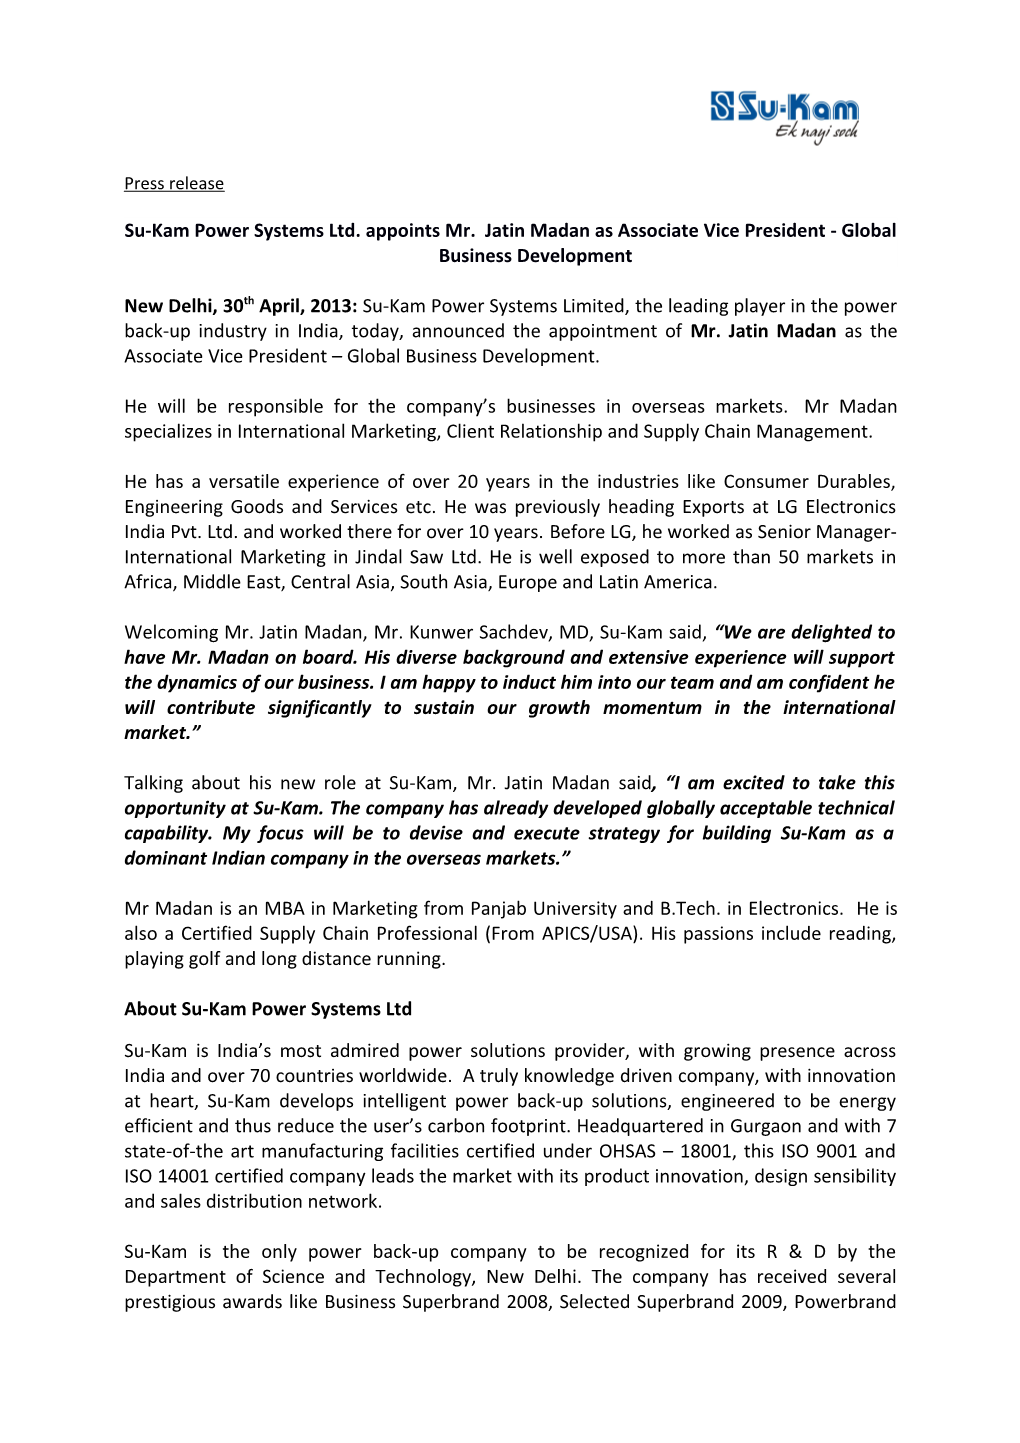 Su-Kampower Systems Ltd. Appoints Mr. Jatin Madan As Associate Vice President - Global